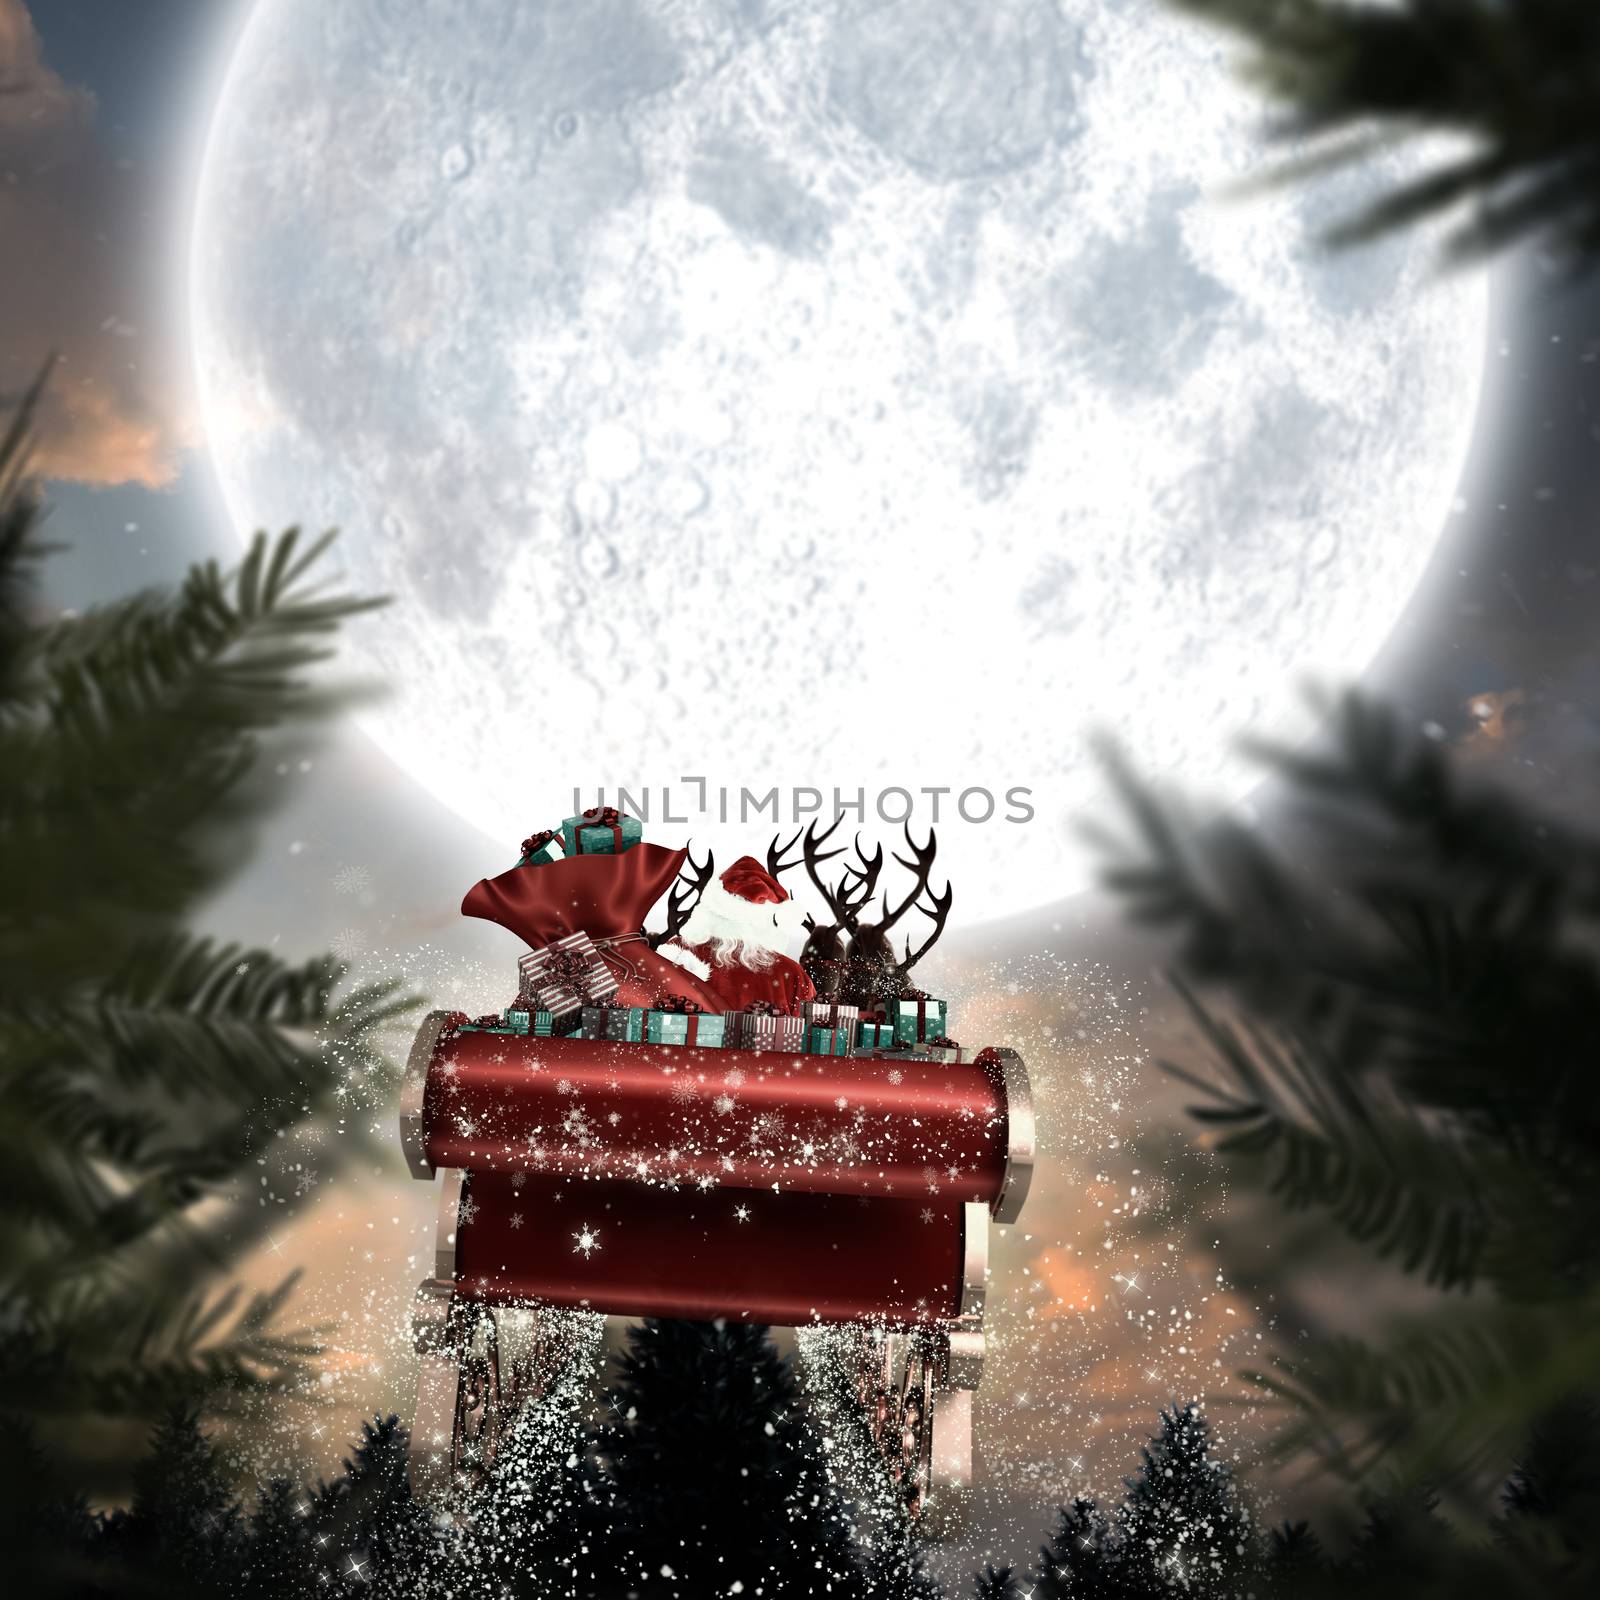 Composite image of santa flying his sleigh by Wavebreakmedia